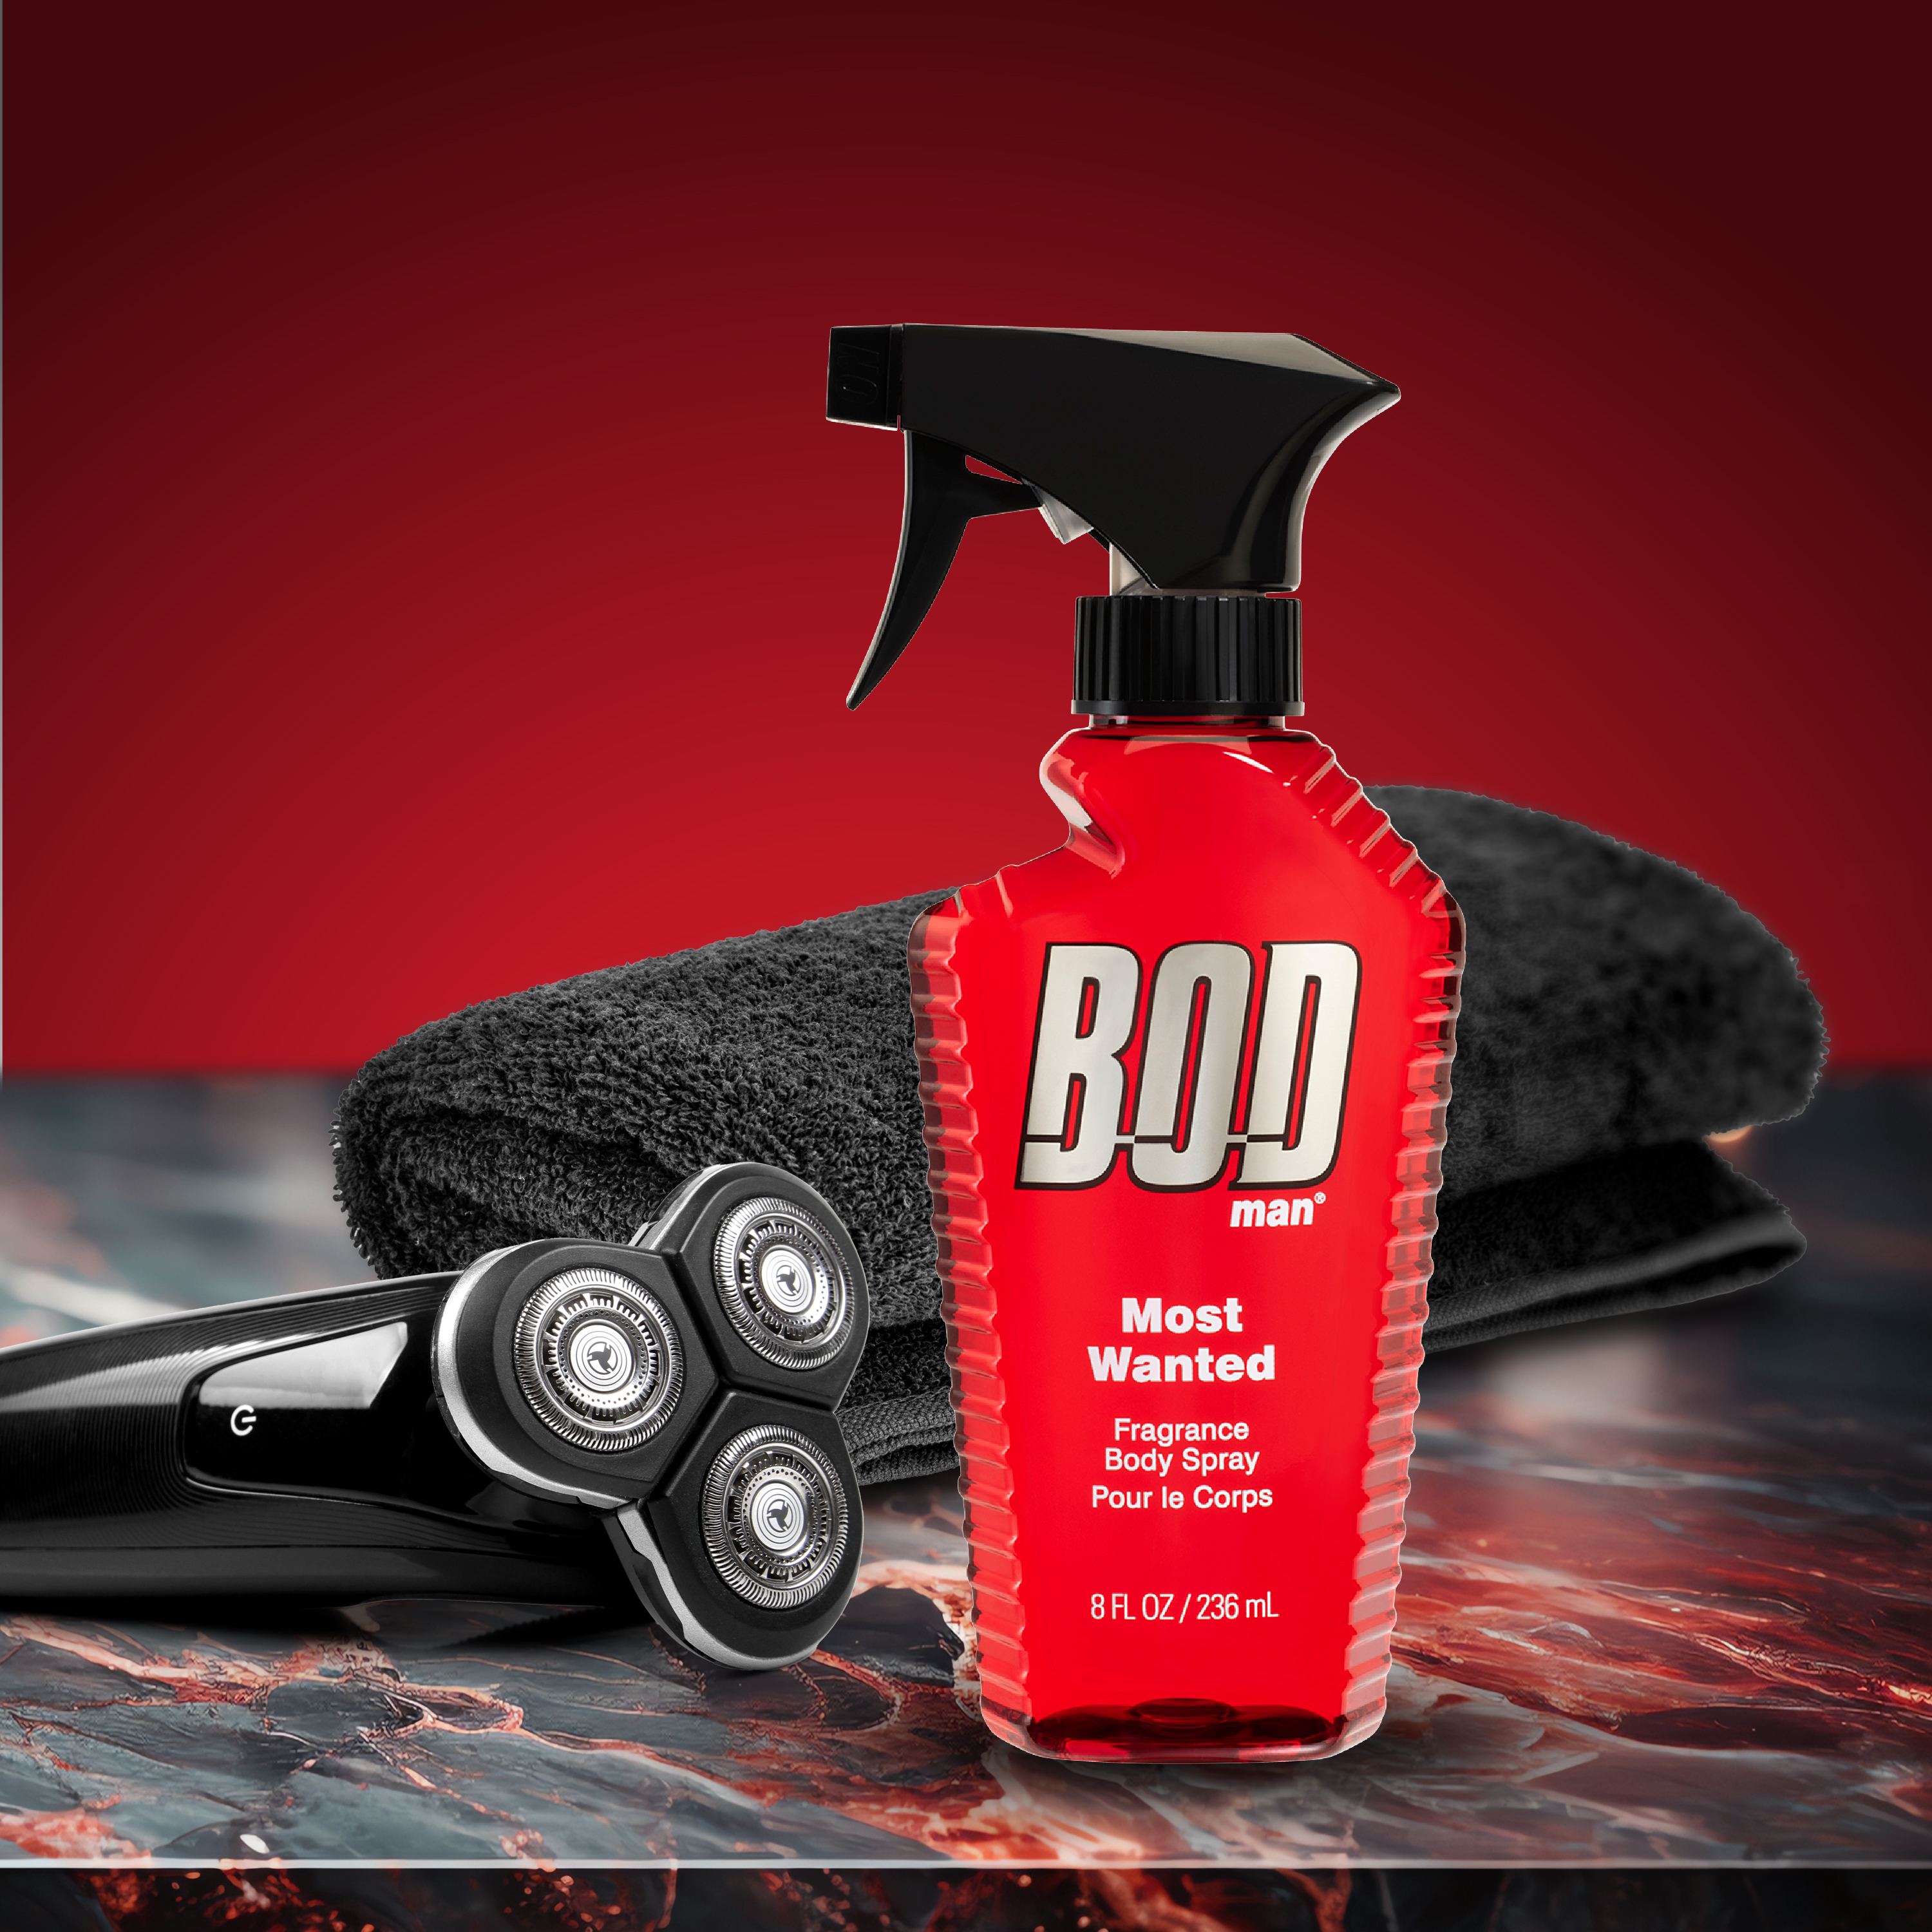 BOD Man Fragrance Body Spray, Most Wanted, 8 fl oz - image 4 of 7